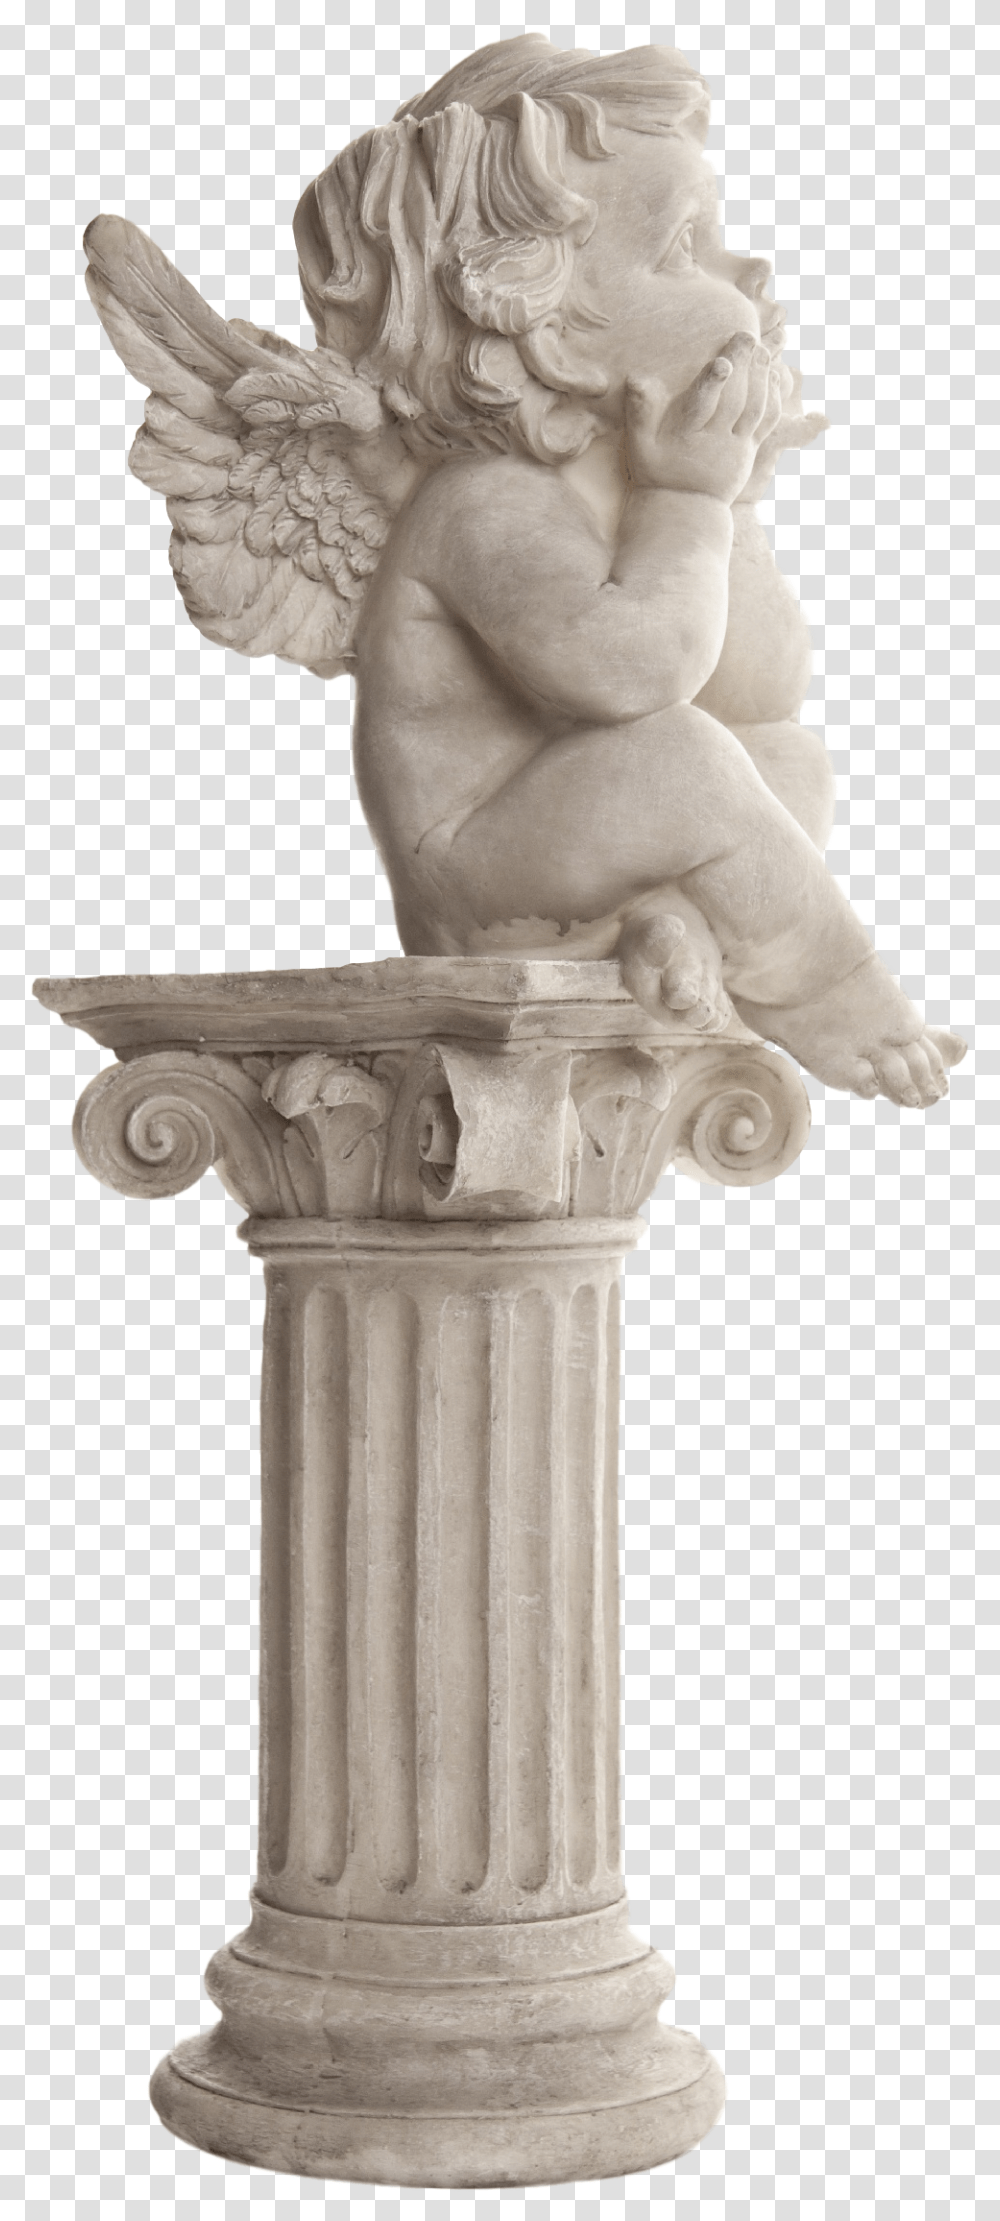 Statue Sculpture Art Figurine Sculpture, Architecture, Building, Pillar, Column Transparent Png